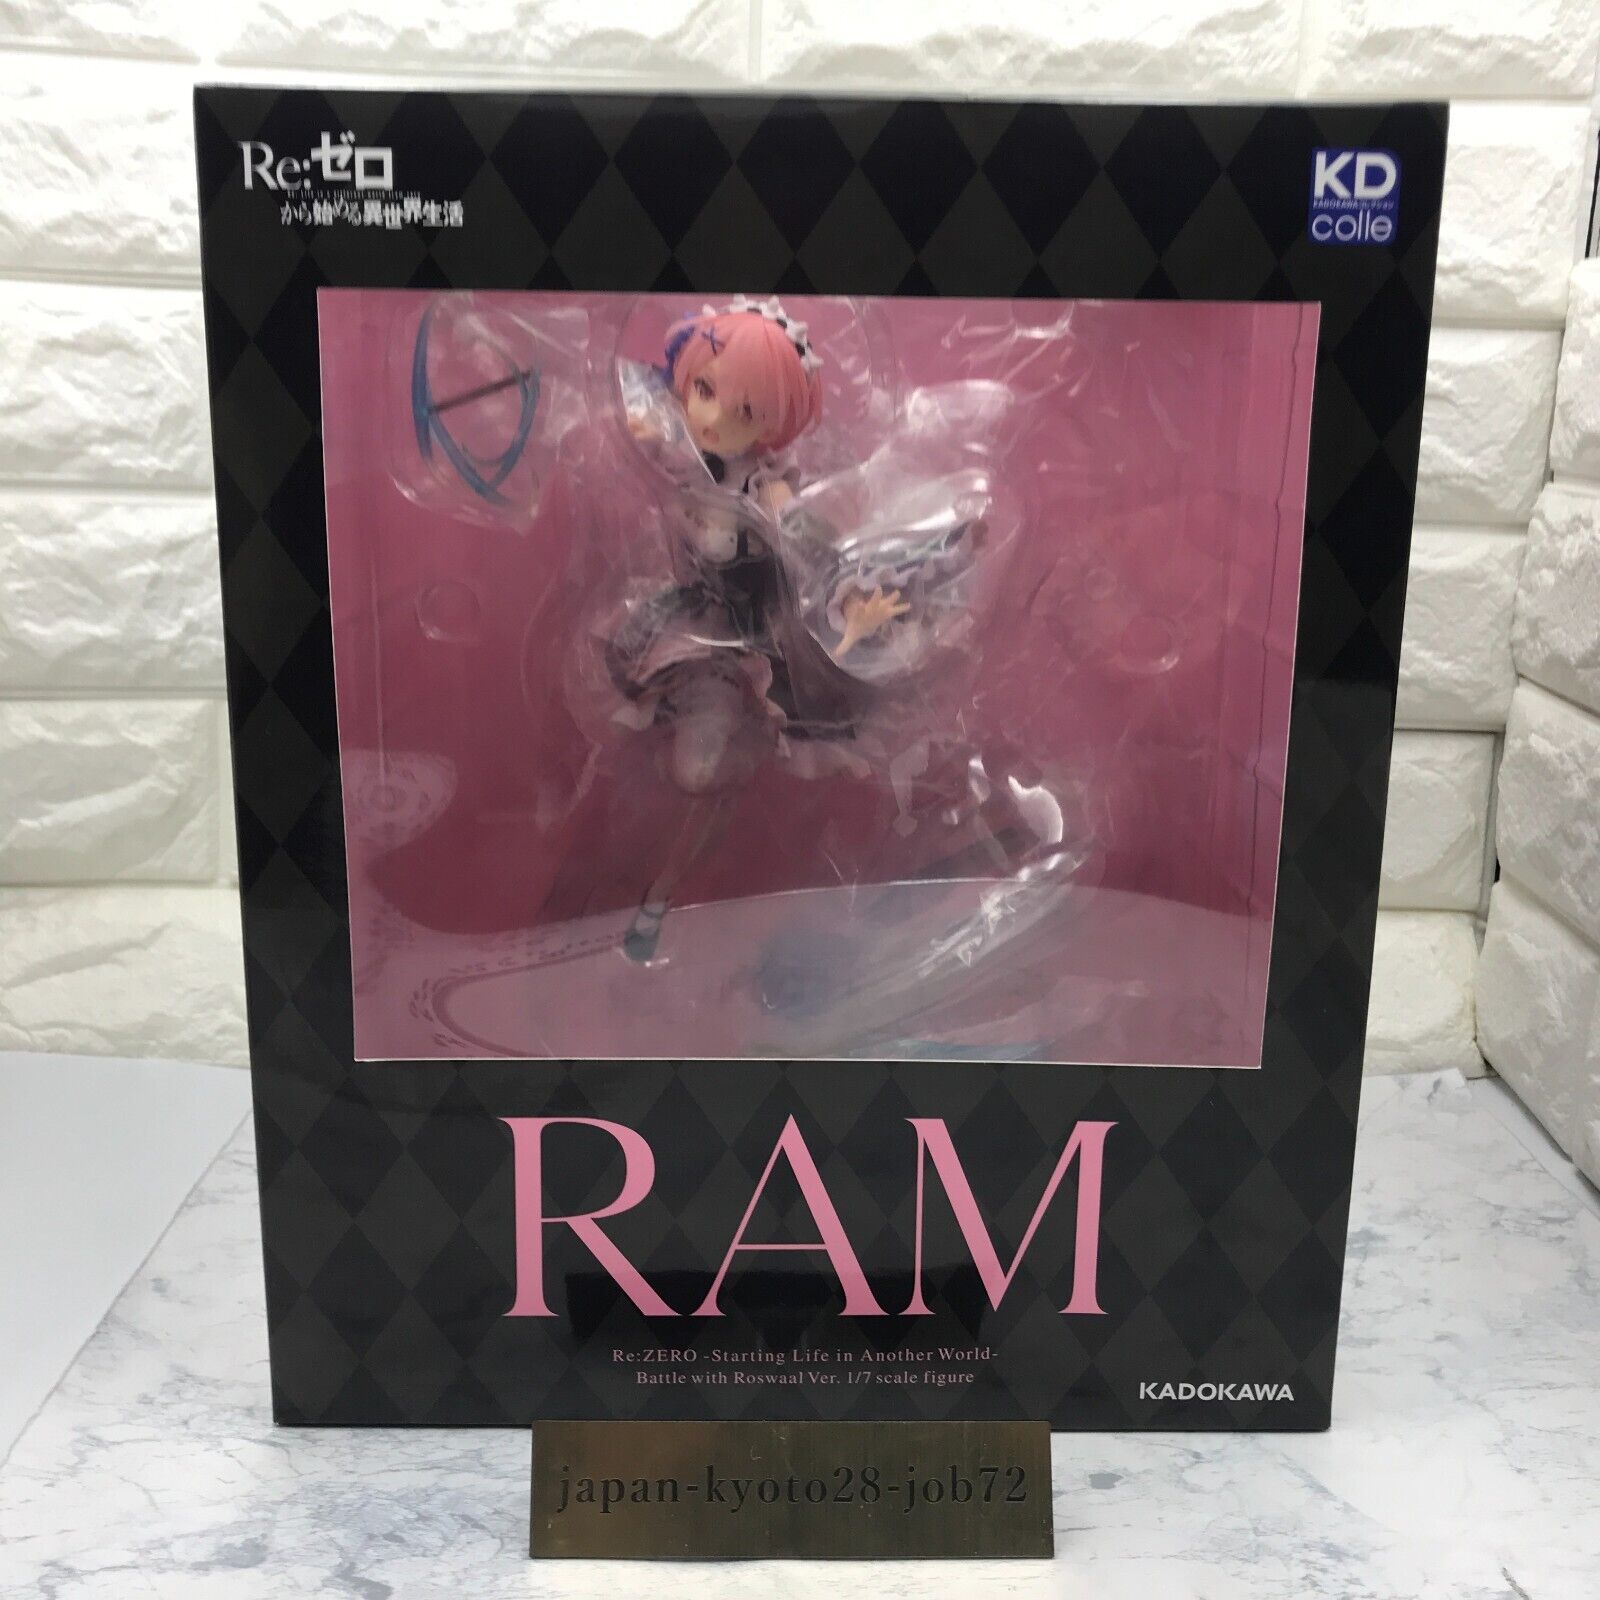 KADOKAWA KDcolle Re:ZERO RAM Battle with Roswaal Ver. 1/7 PVC Figure Jp